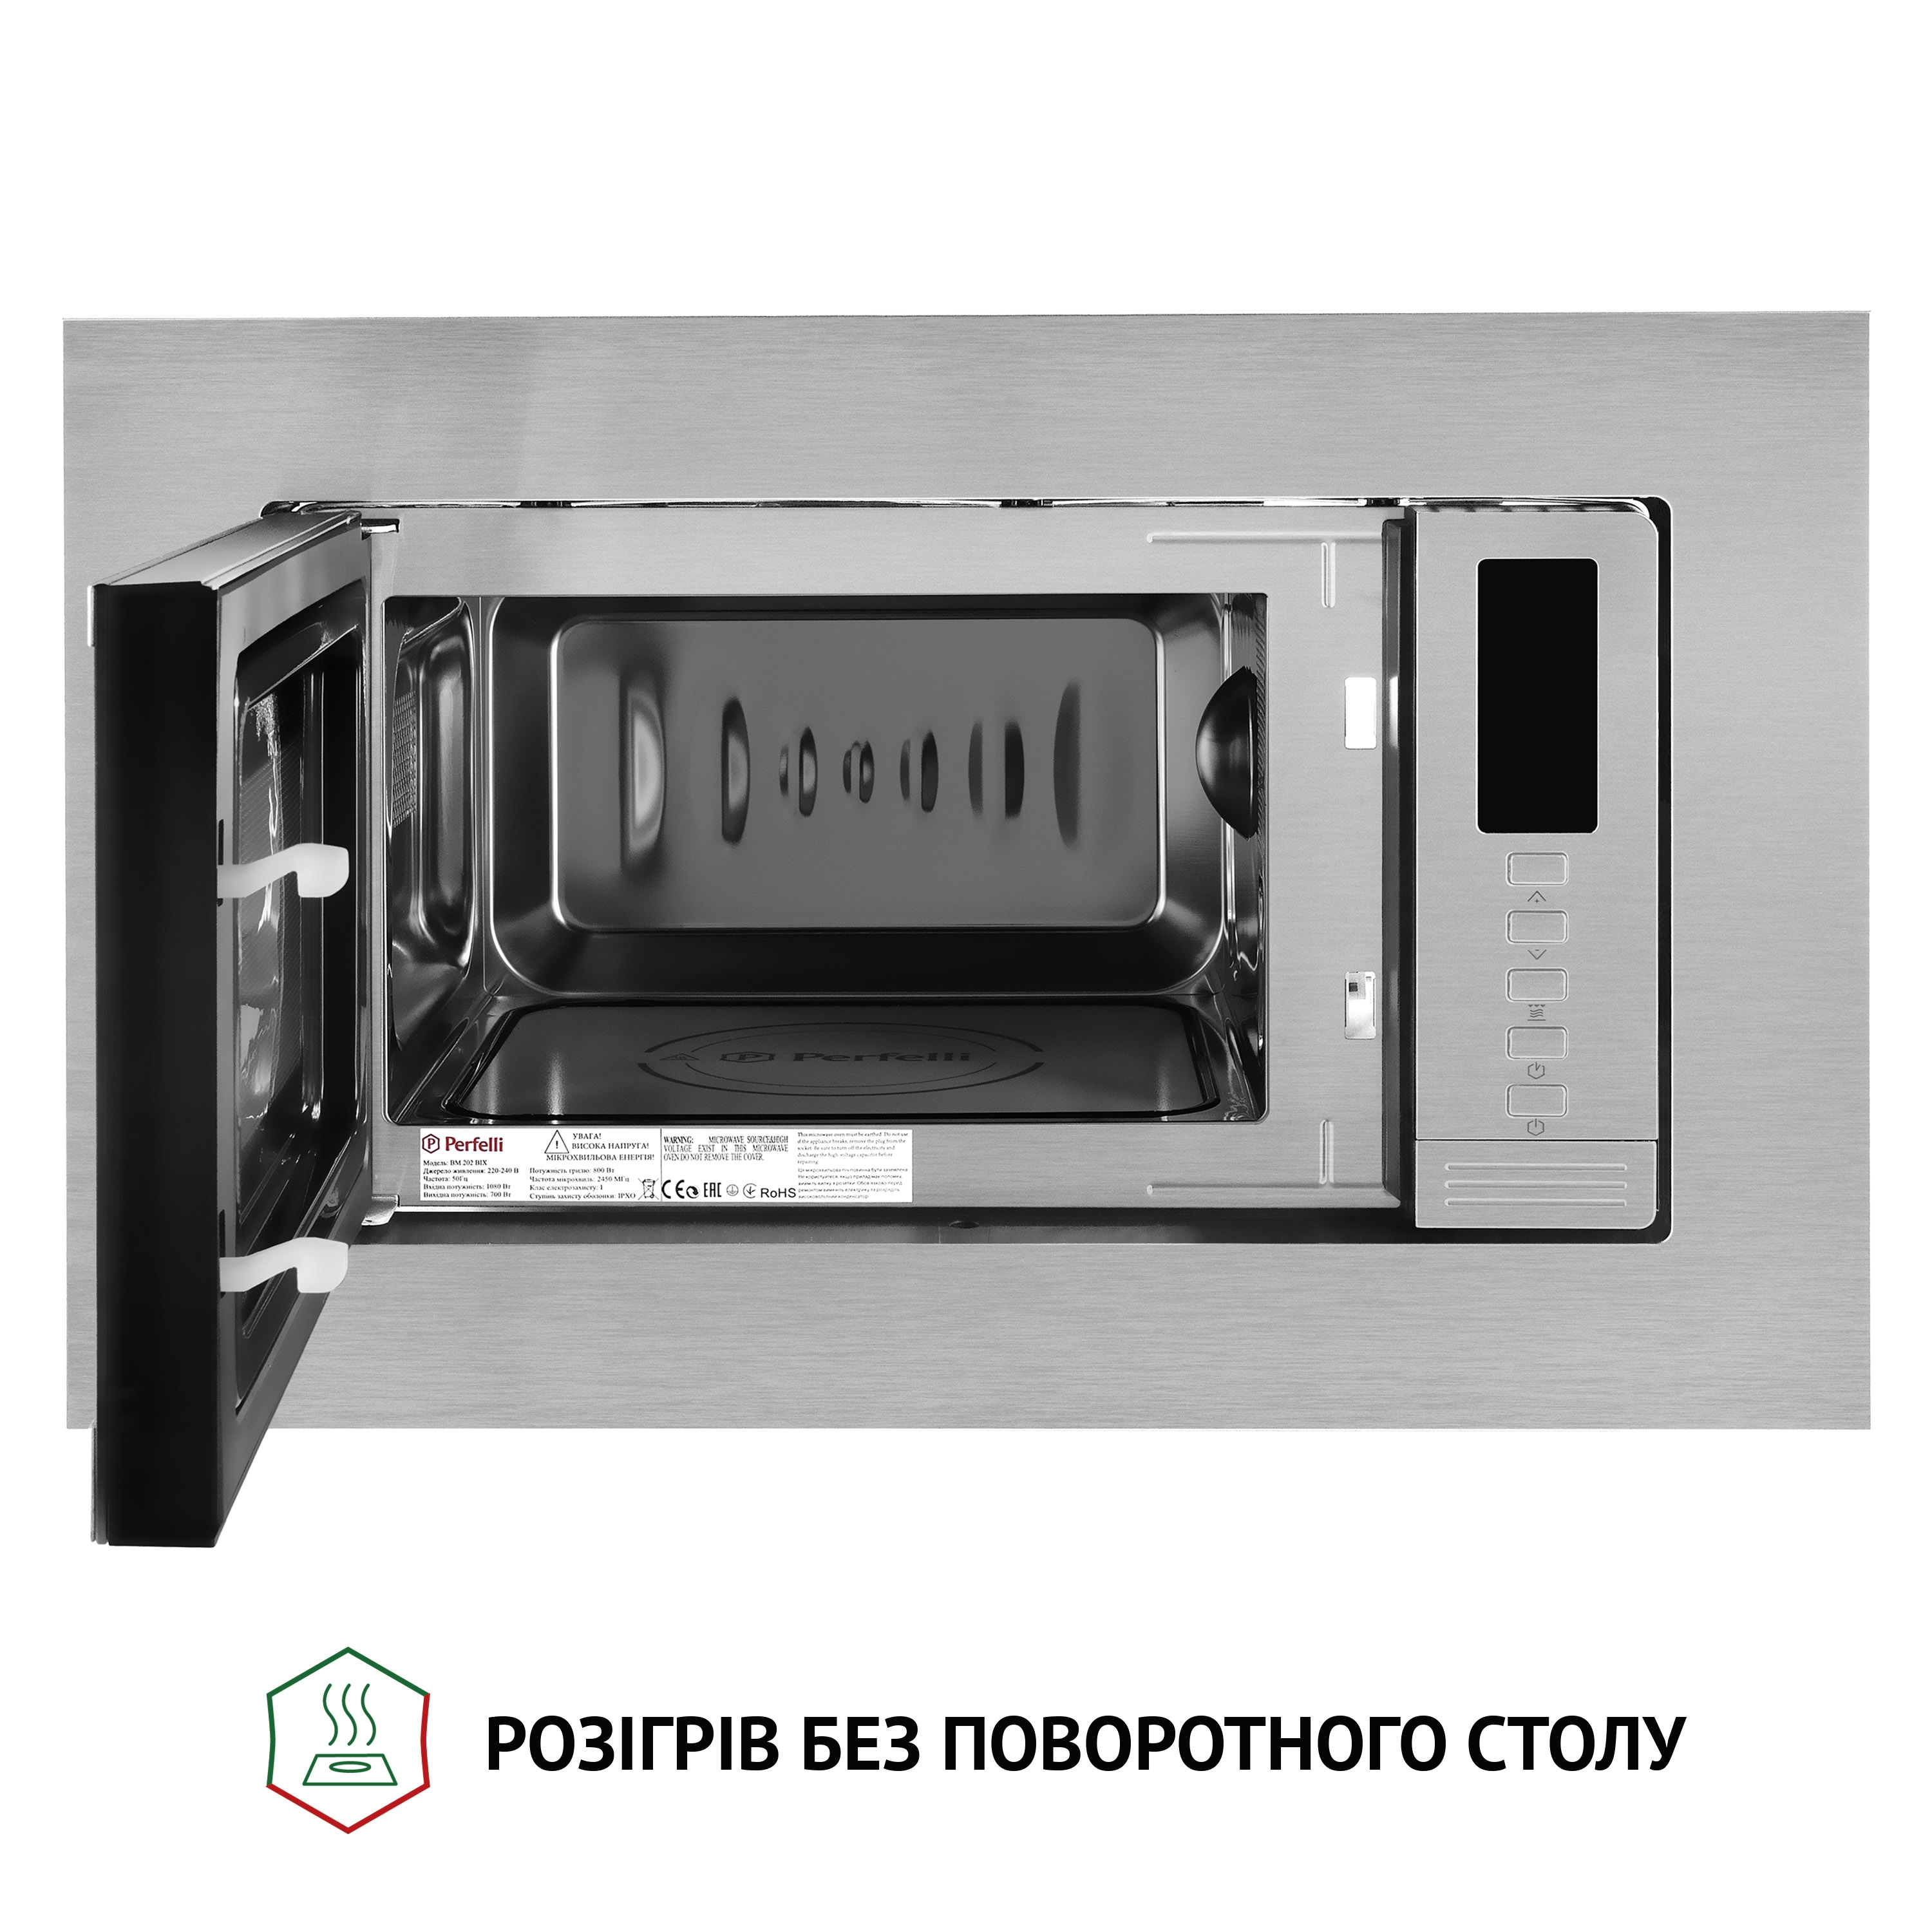 Микроволновая печь Perfelli BM 202 BIX цена 7469.00 грн - фотография 2